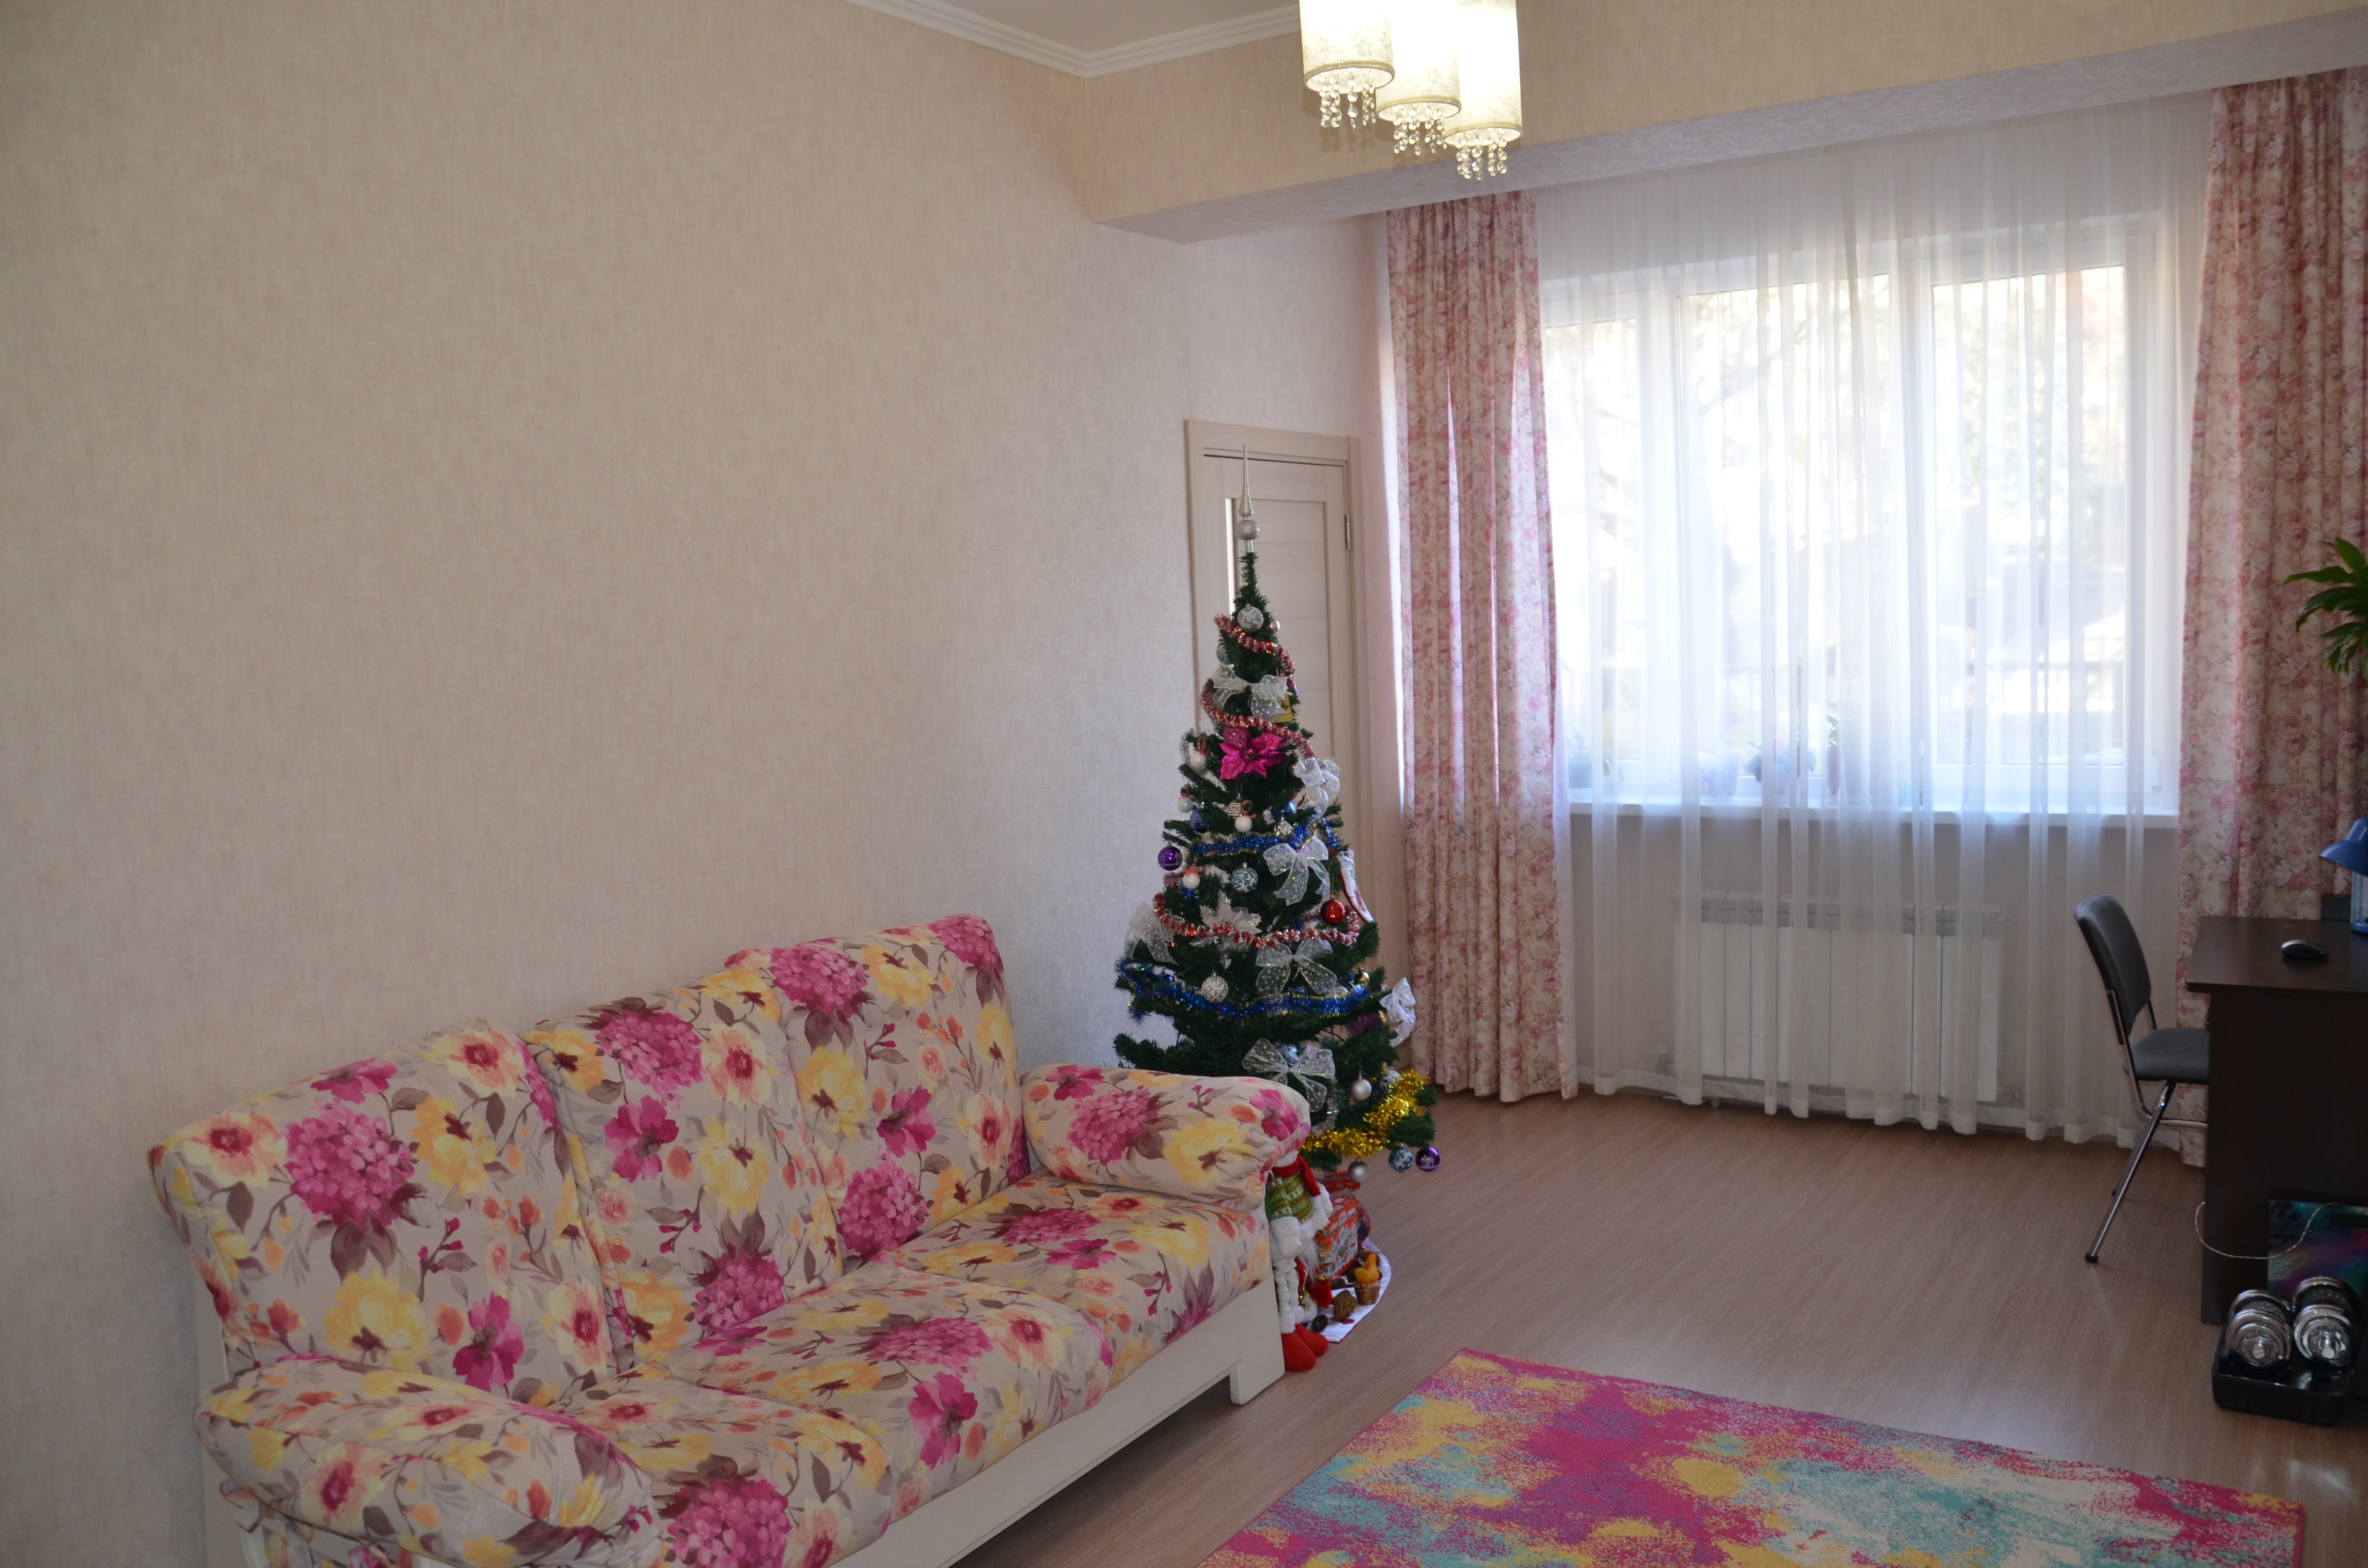 3 комнатная квартира у моря в городе Сочи, фото 1, телефон продавца: +7 (988) 231-80-60